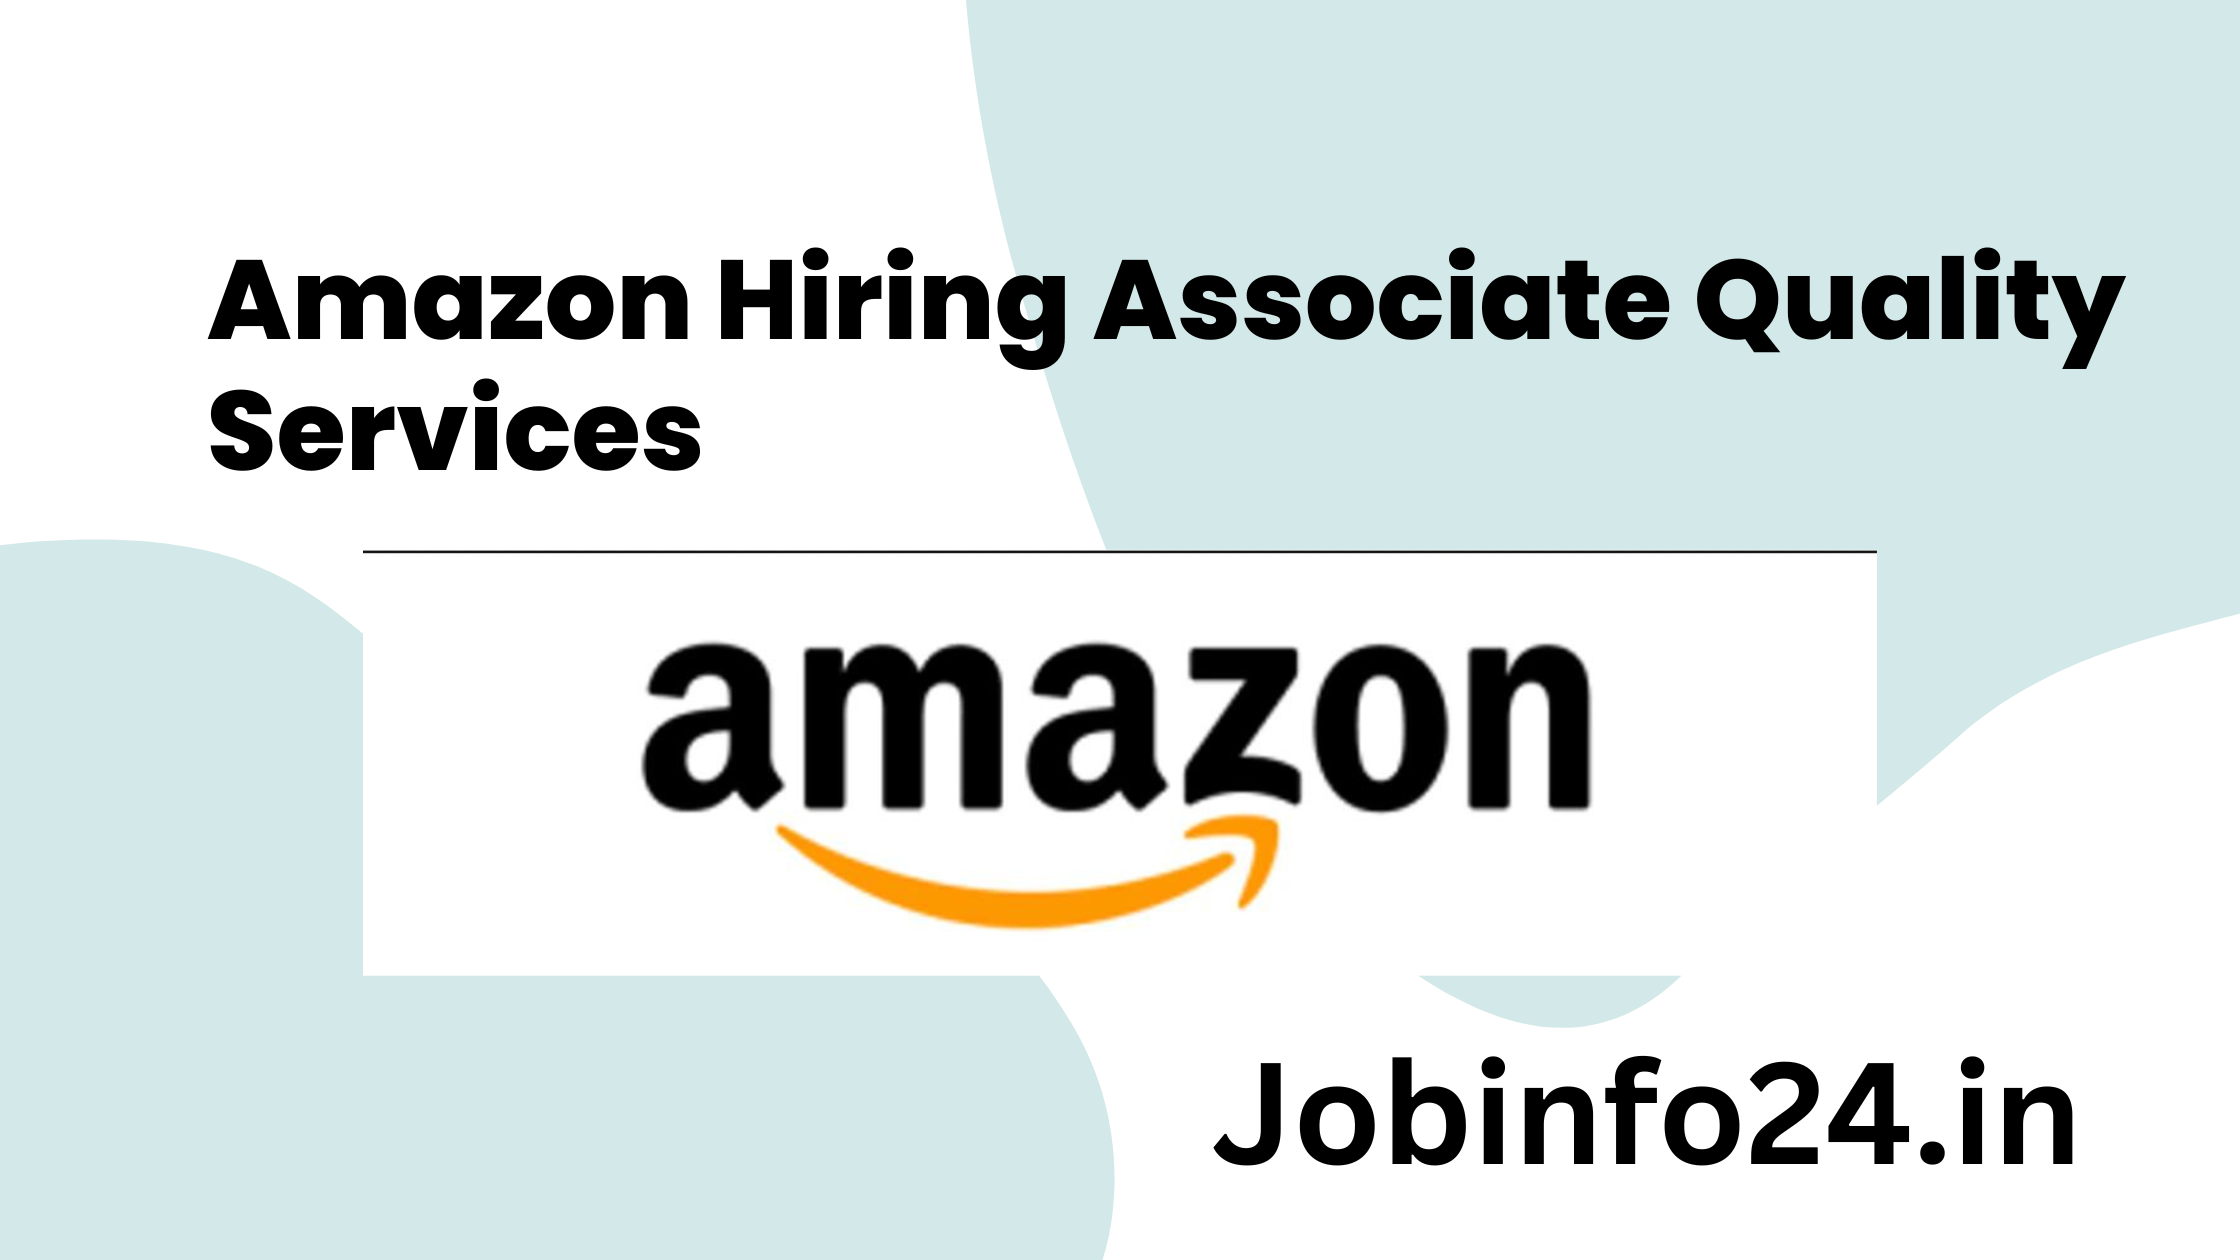 Amazon Hiring Associate Quality Services